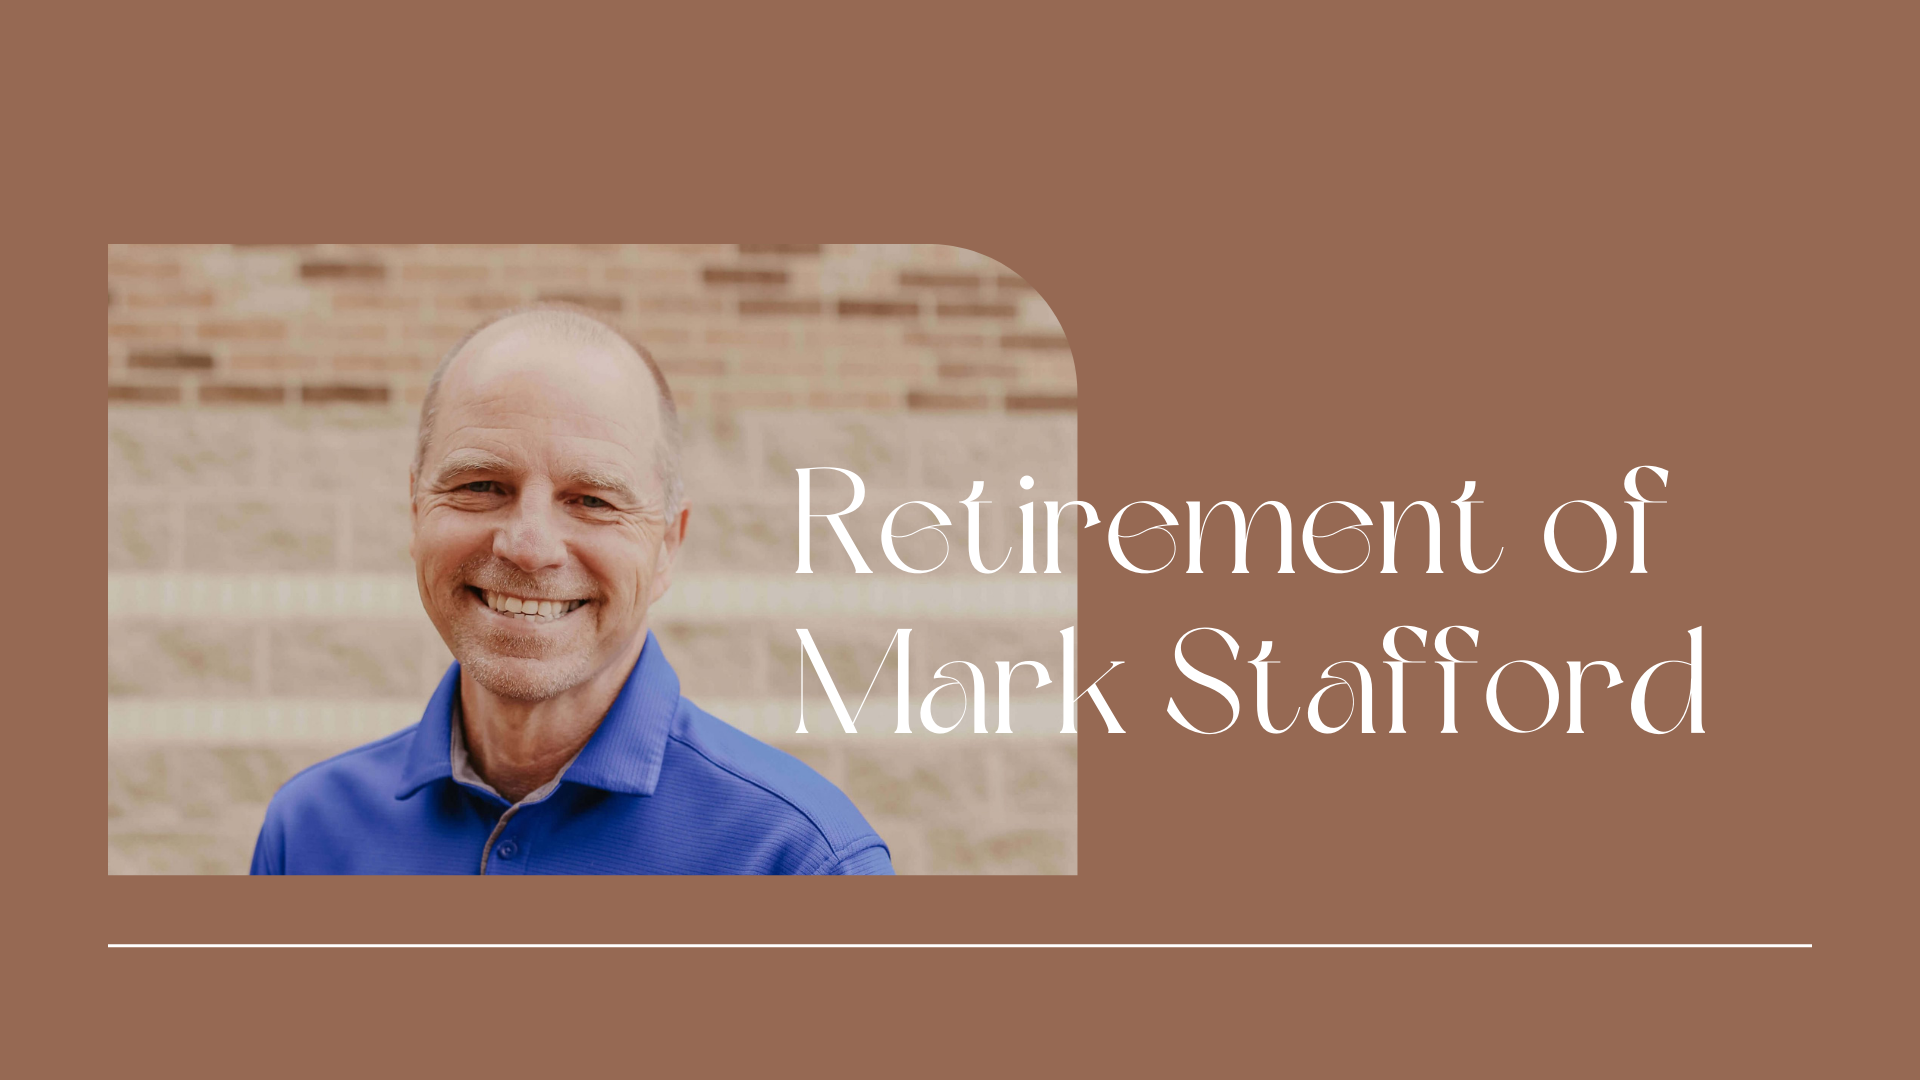 Mark Stafford’s Retirement Reception